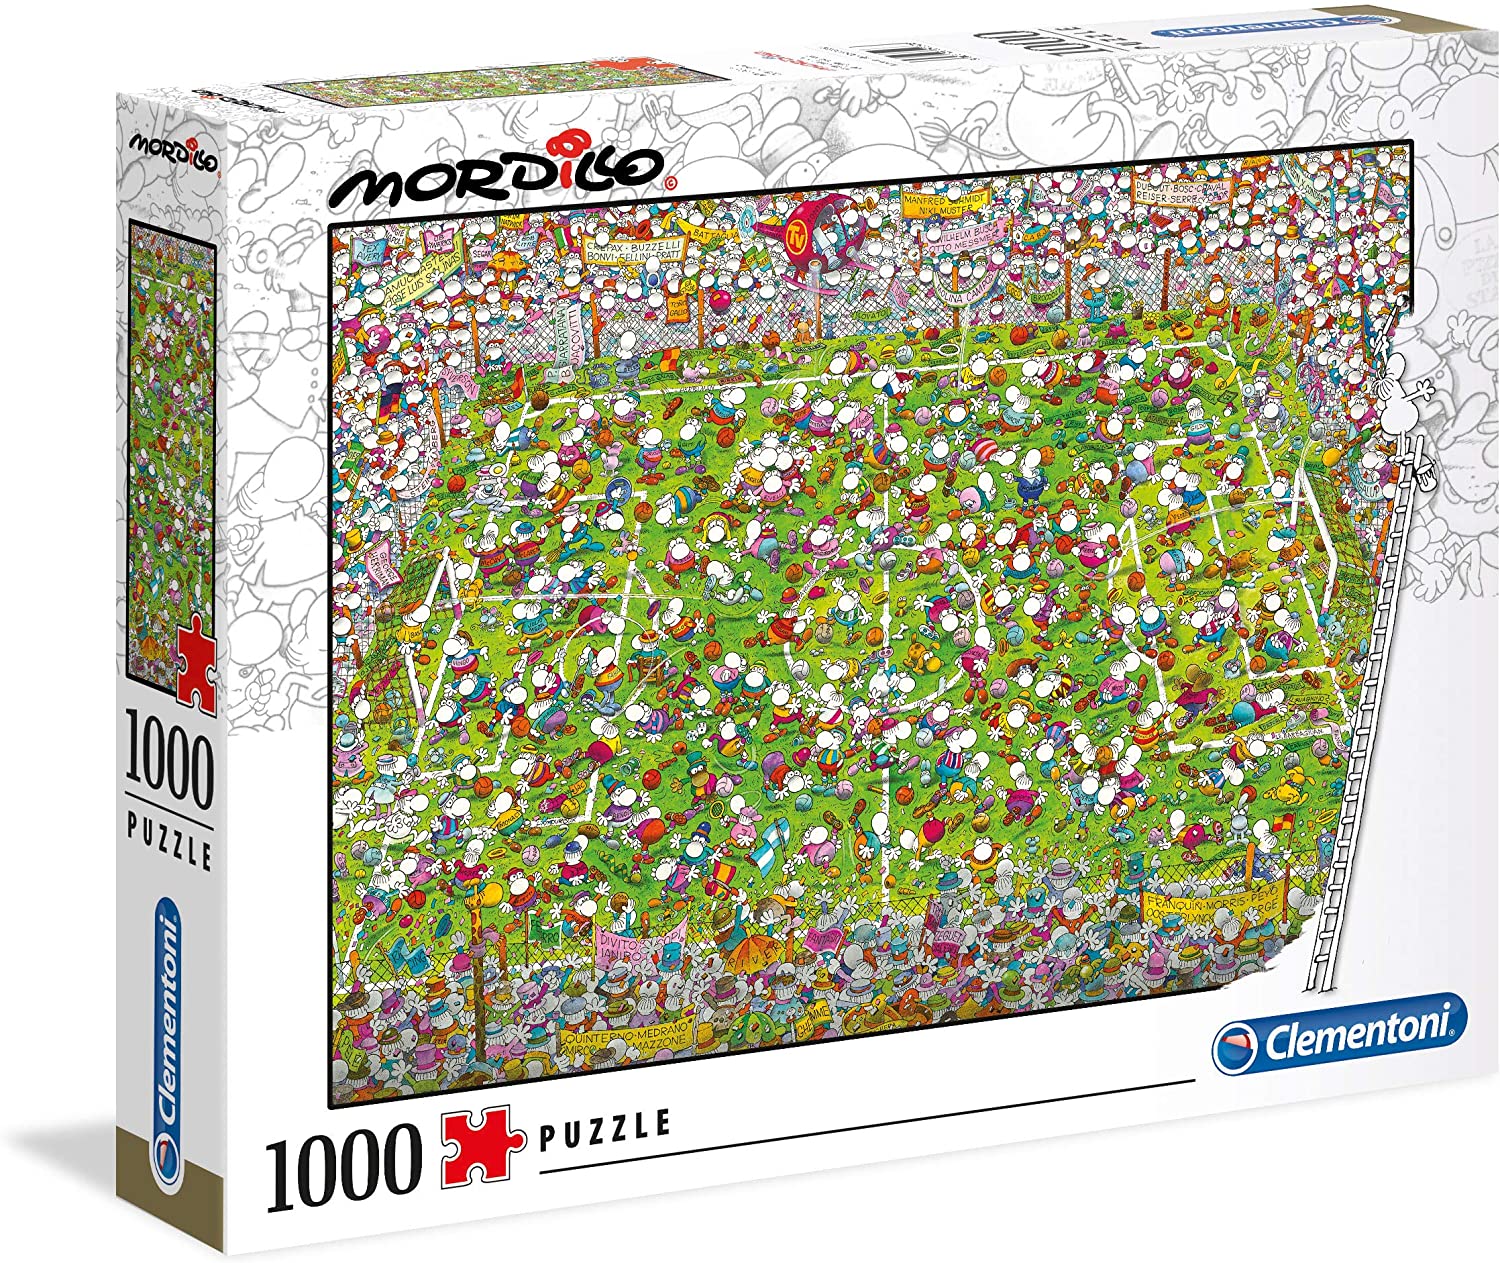 Clementoni 39537 Mordillo Puzzle 1,000 Pieces The Game